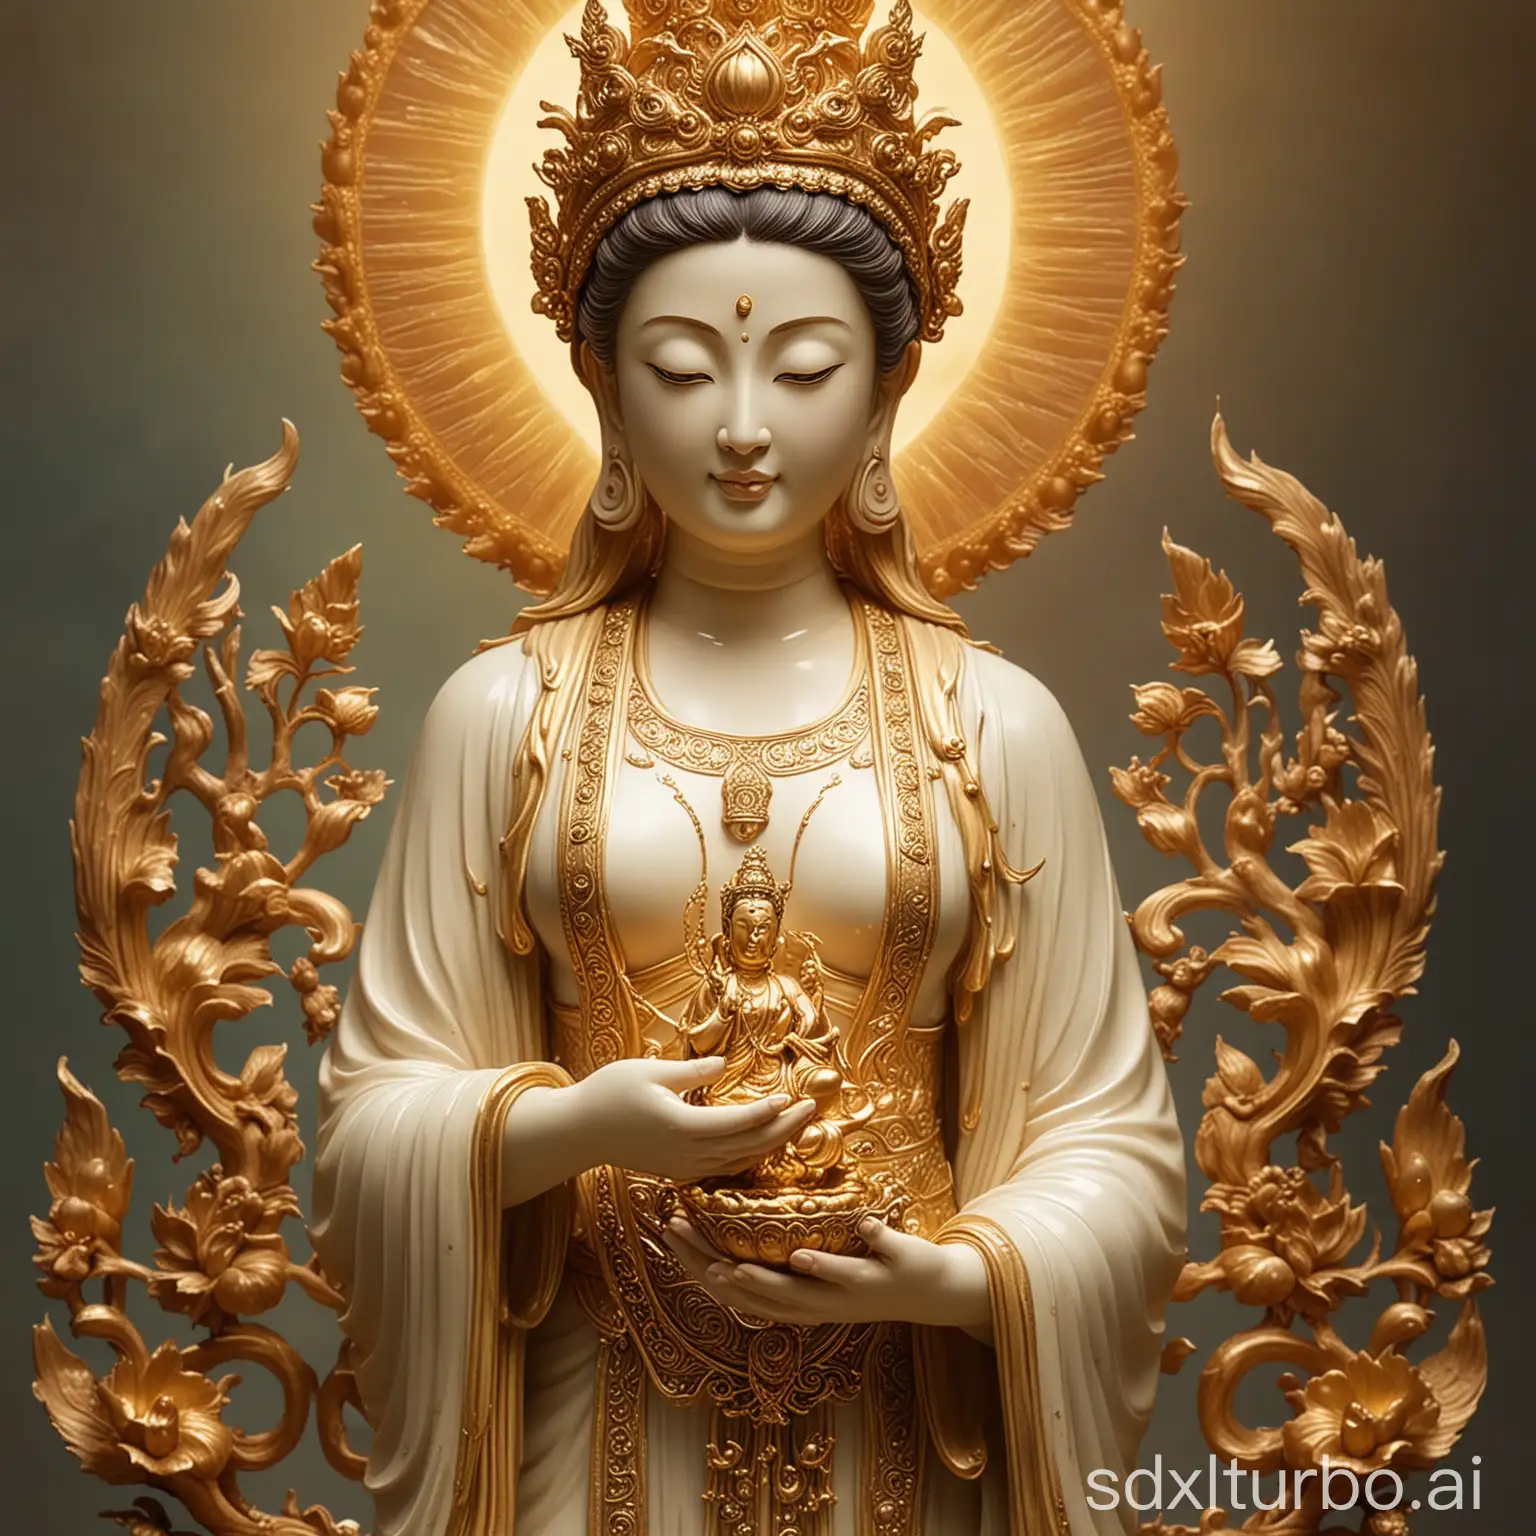 Smiling Guanyin Bodhisattva Radiating Wisdom and Compassion | SDXL 